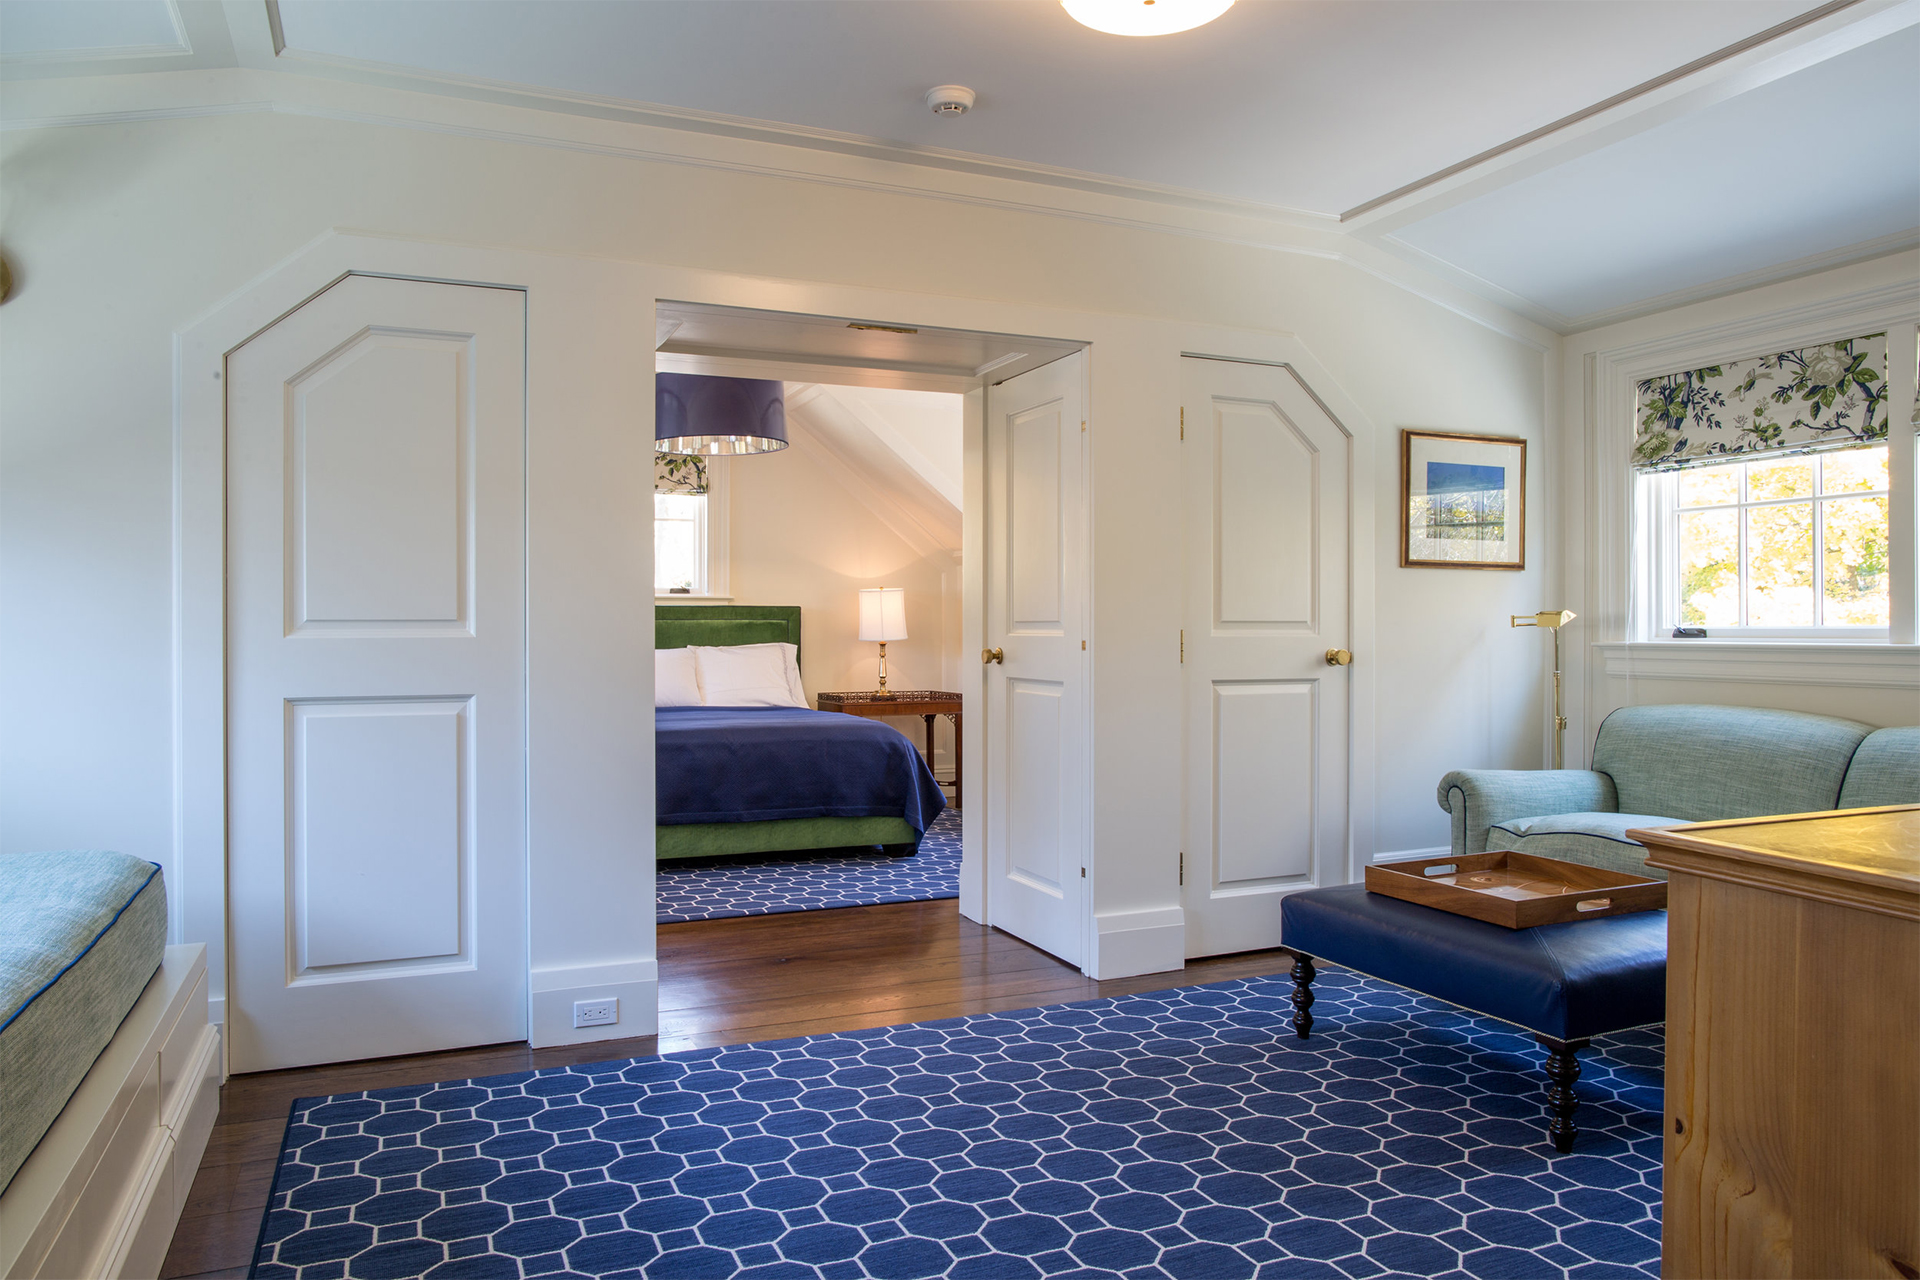 Long Island Residence - Master Bedroom Renovations 5